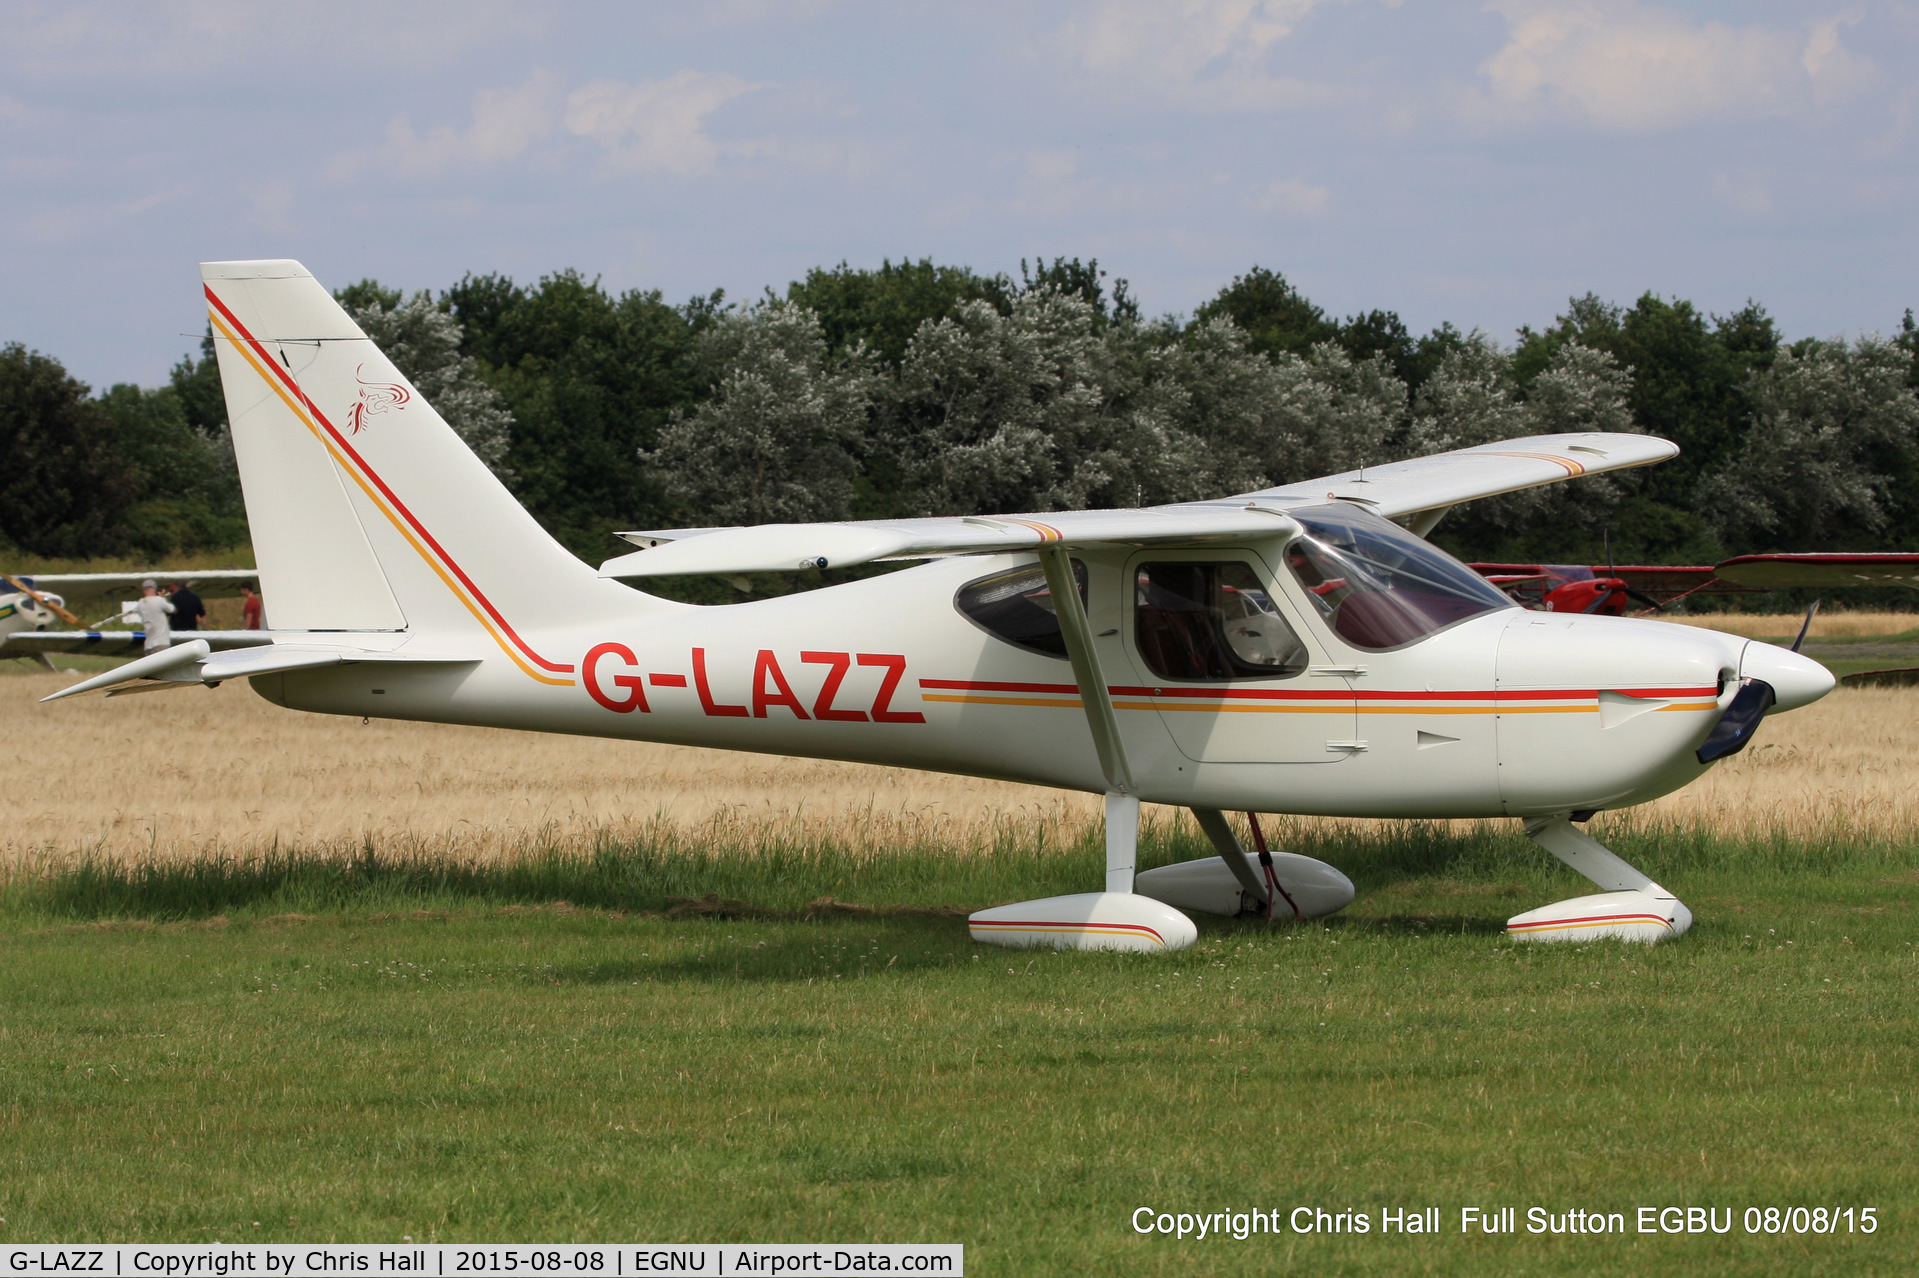 G-LAZZ, 2002 Stoddard-Hamilton Glastar C/N PFA 295-13059, at the Vale of York LAA strut flyin, Full Sutton